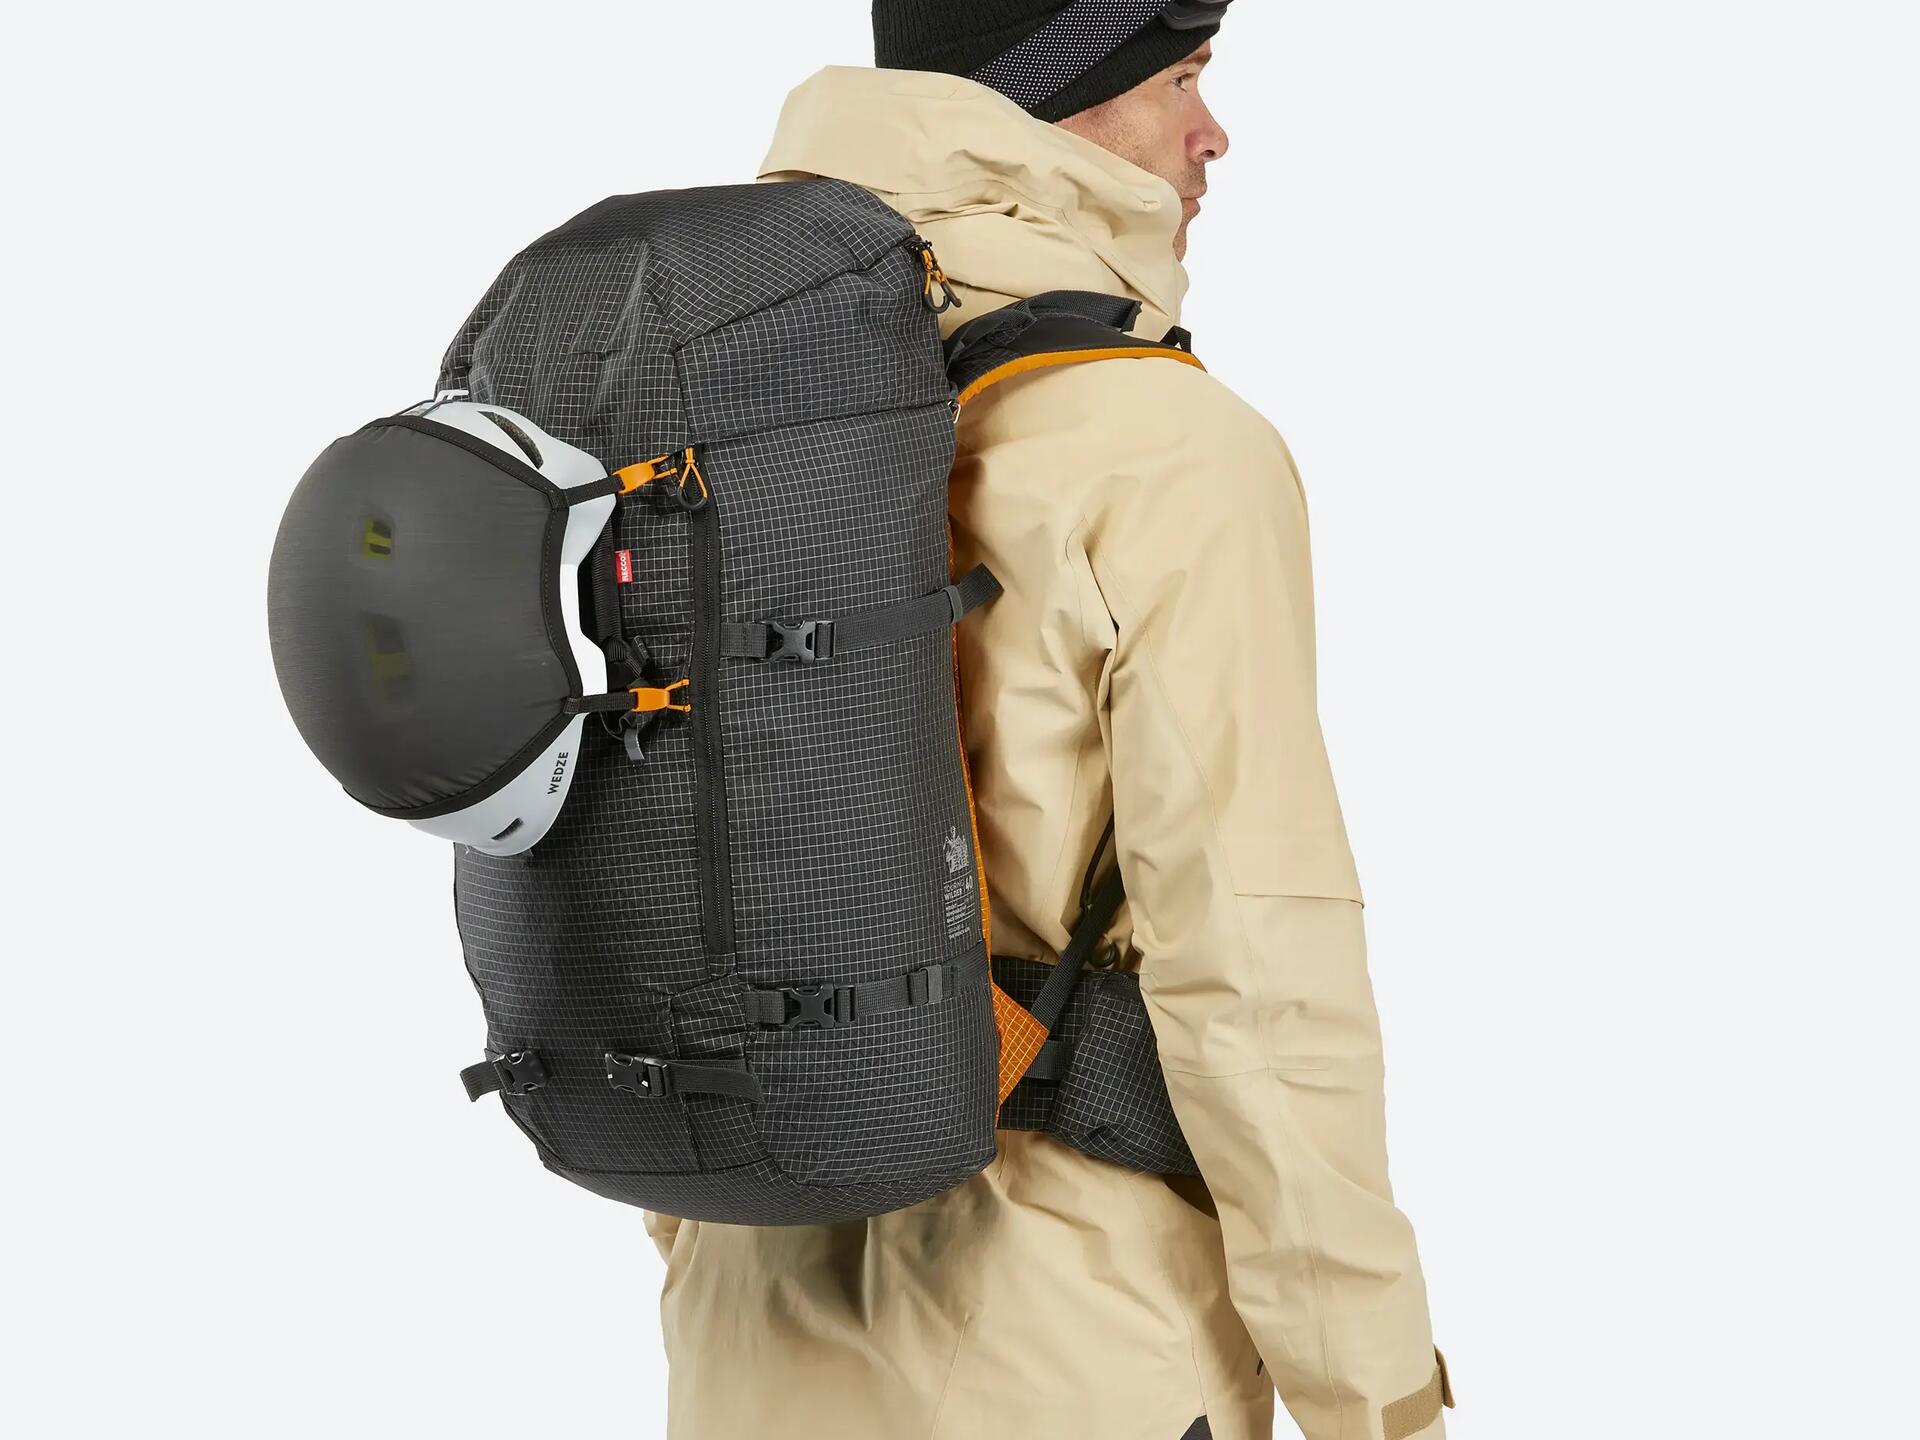 How to choose a ski or snowboard backpack?